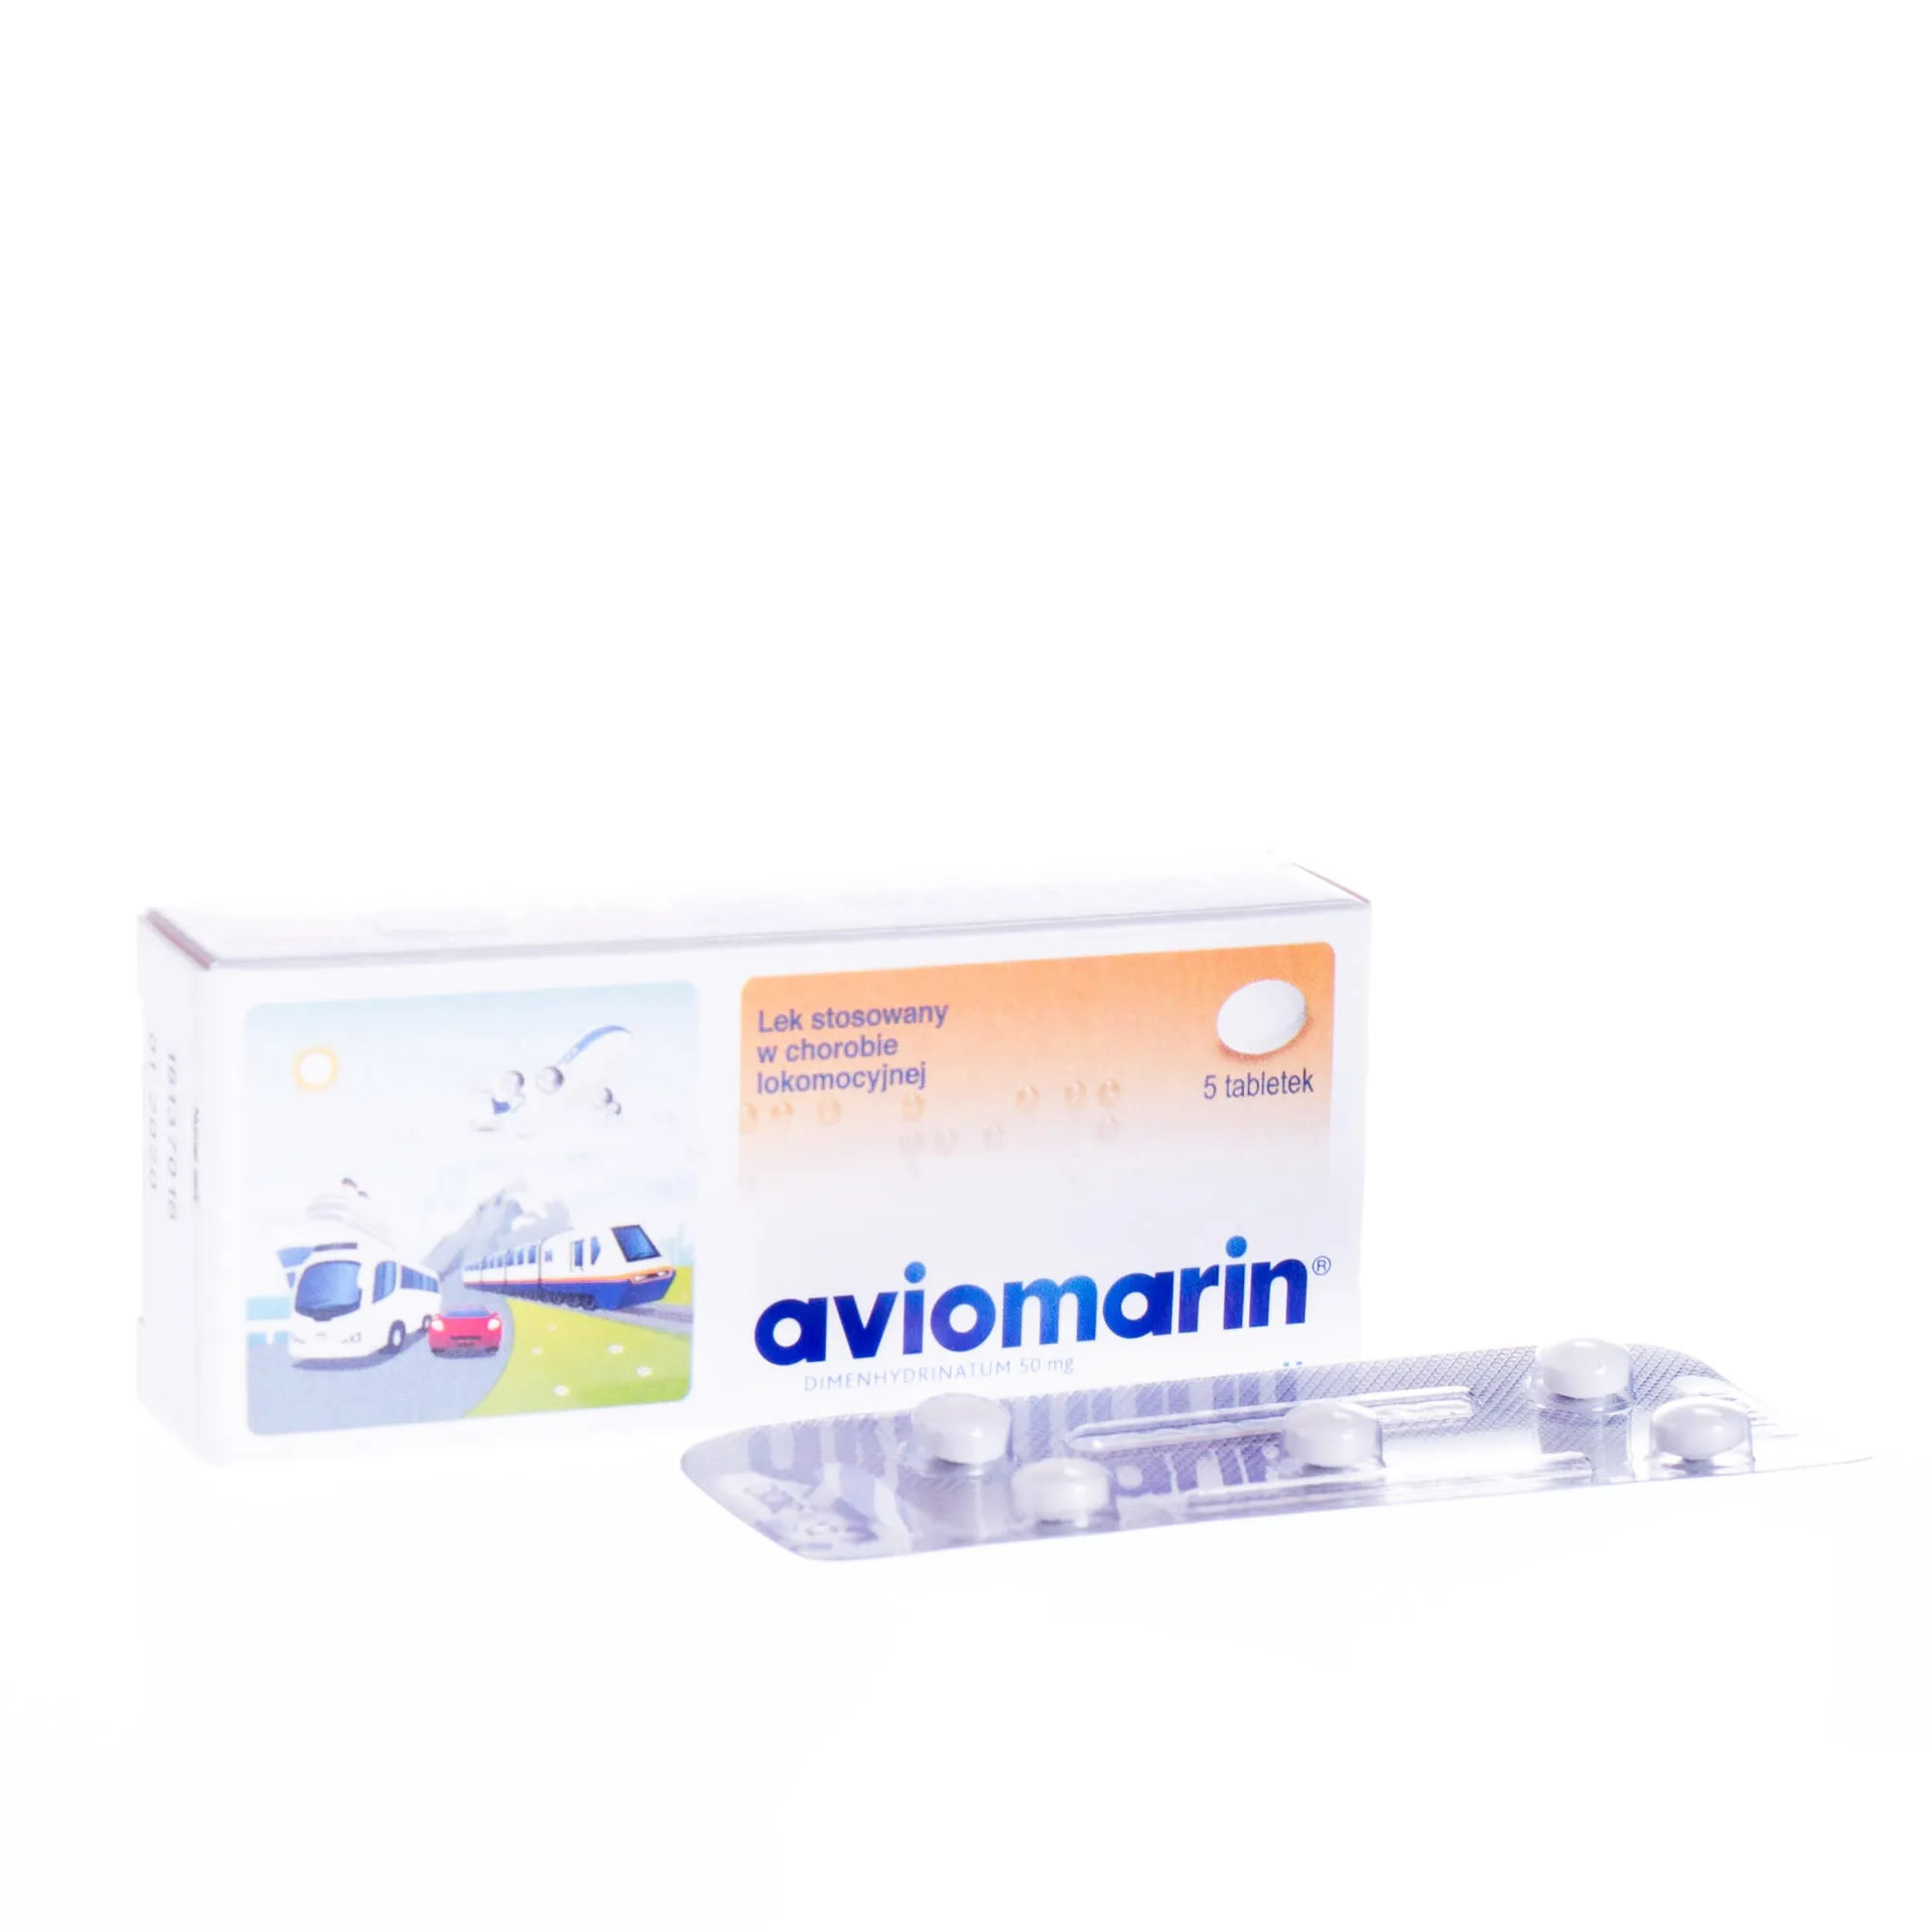 Aviomarin - lek stosowany w chorobie lokomocyjnej, 5 tabletek